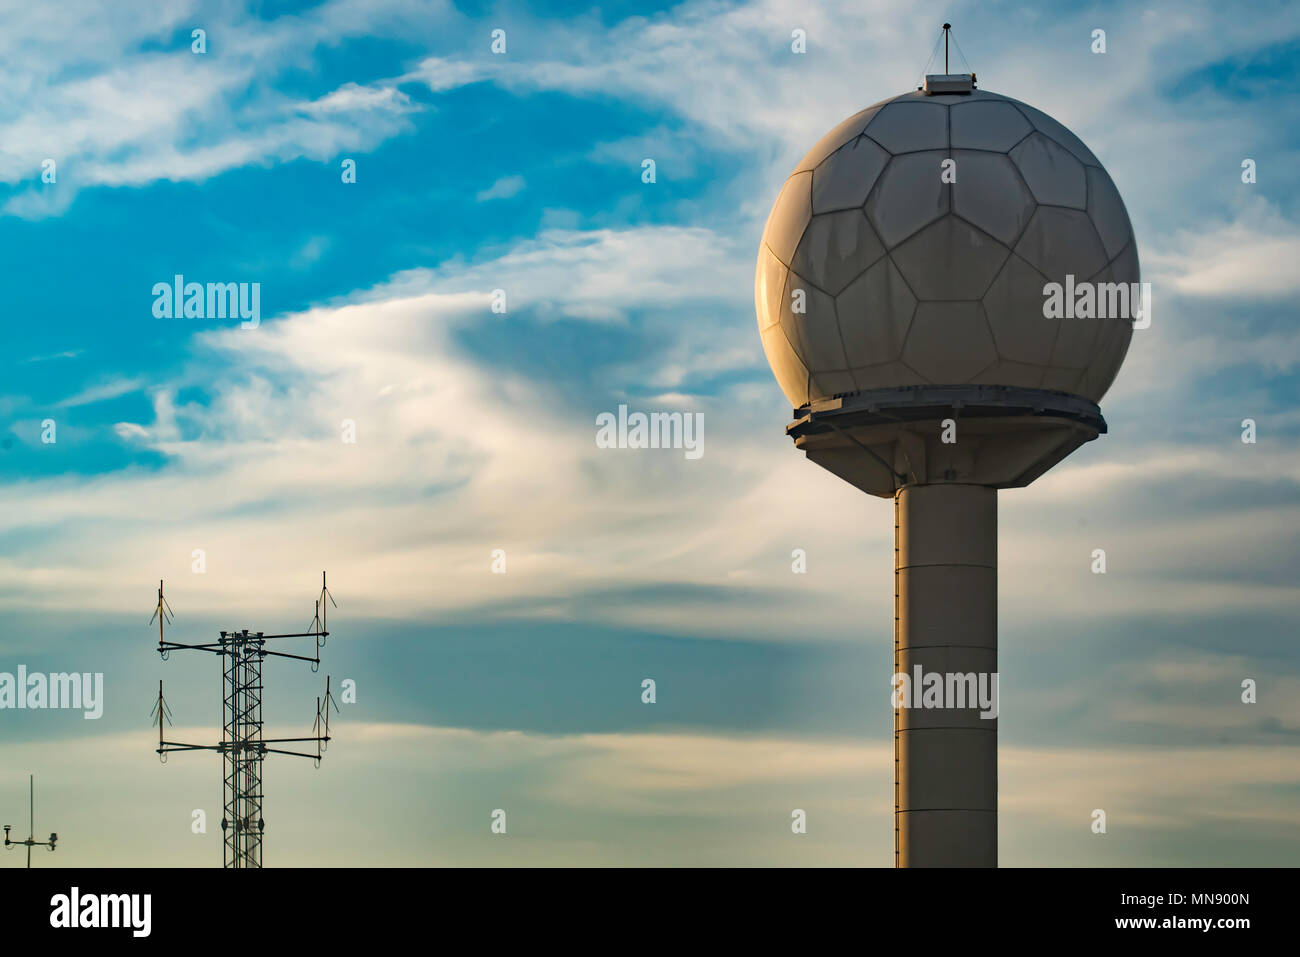 Microondas de radar fotografías e imágenes de alta resolución - Alamy